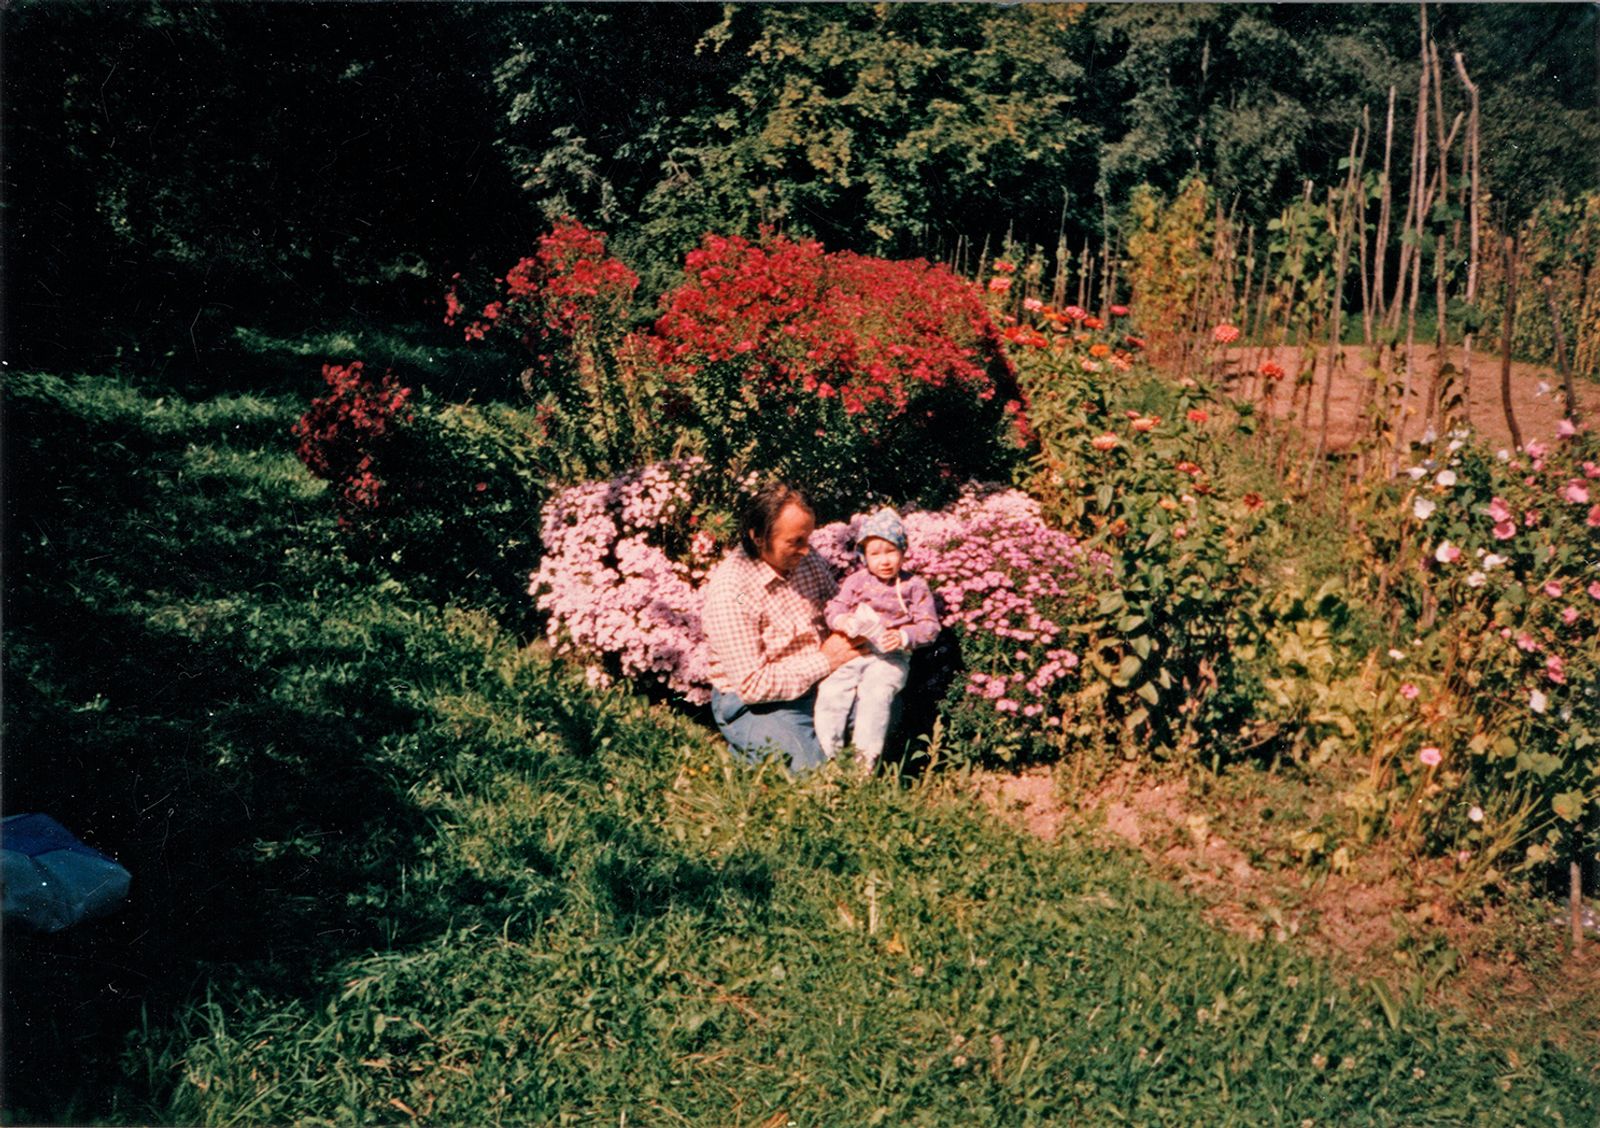 © Lucija Rosc - Me and my grandpa at my grandparents garden (cca 2000)